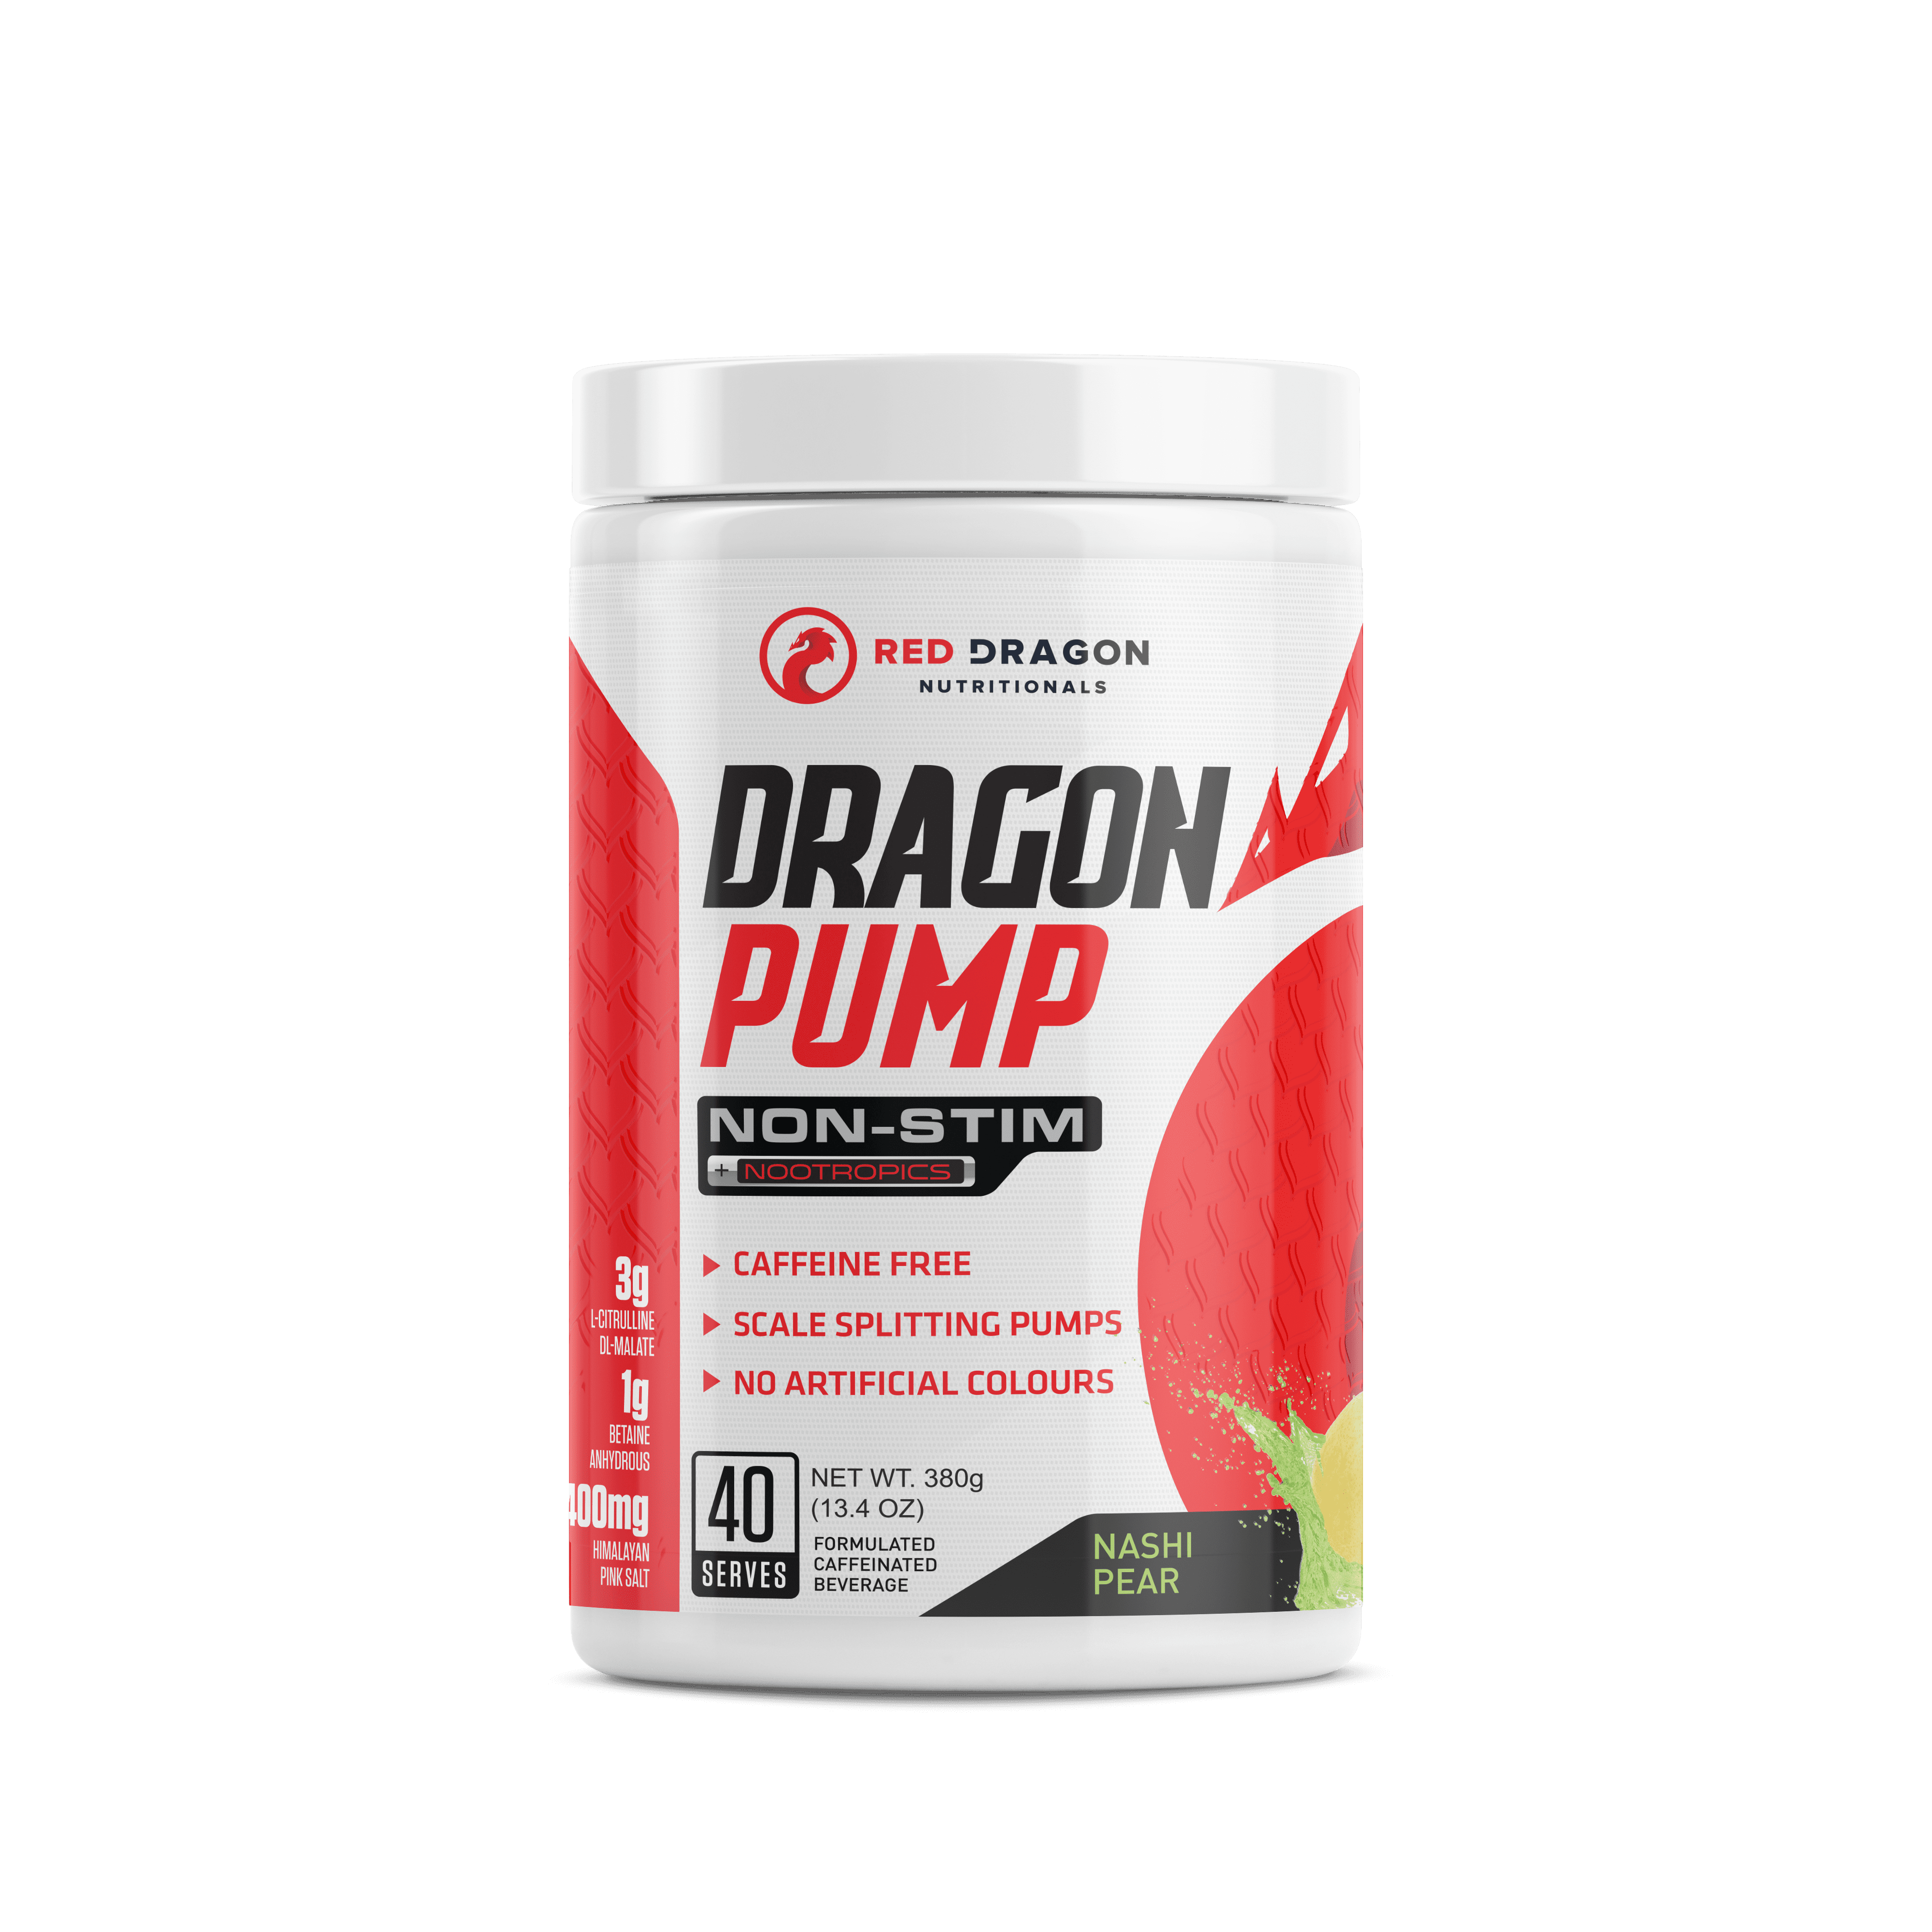 Red Dragon Pump